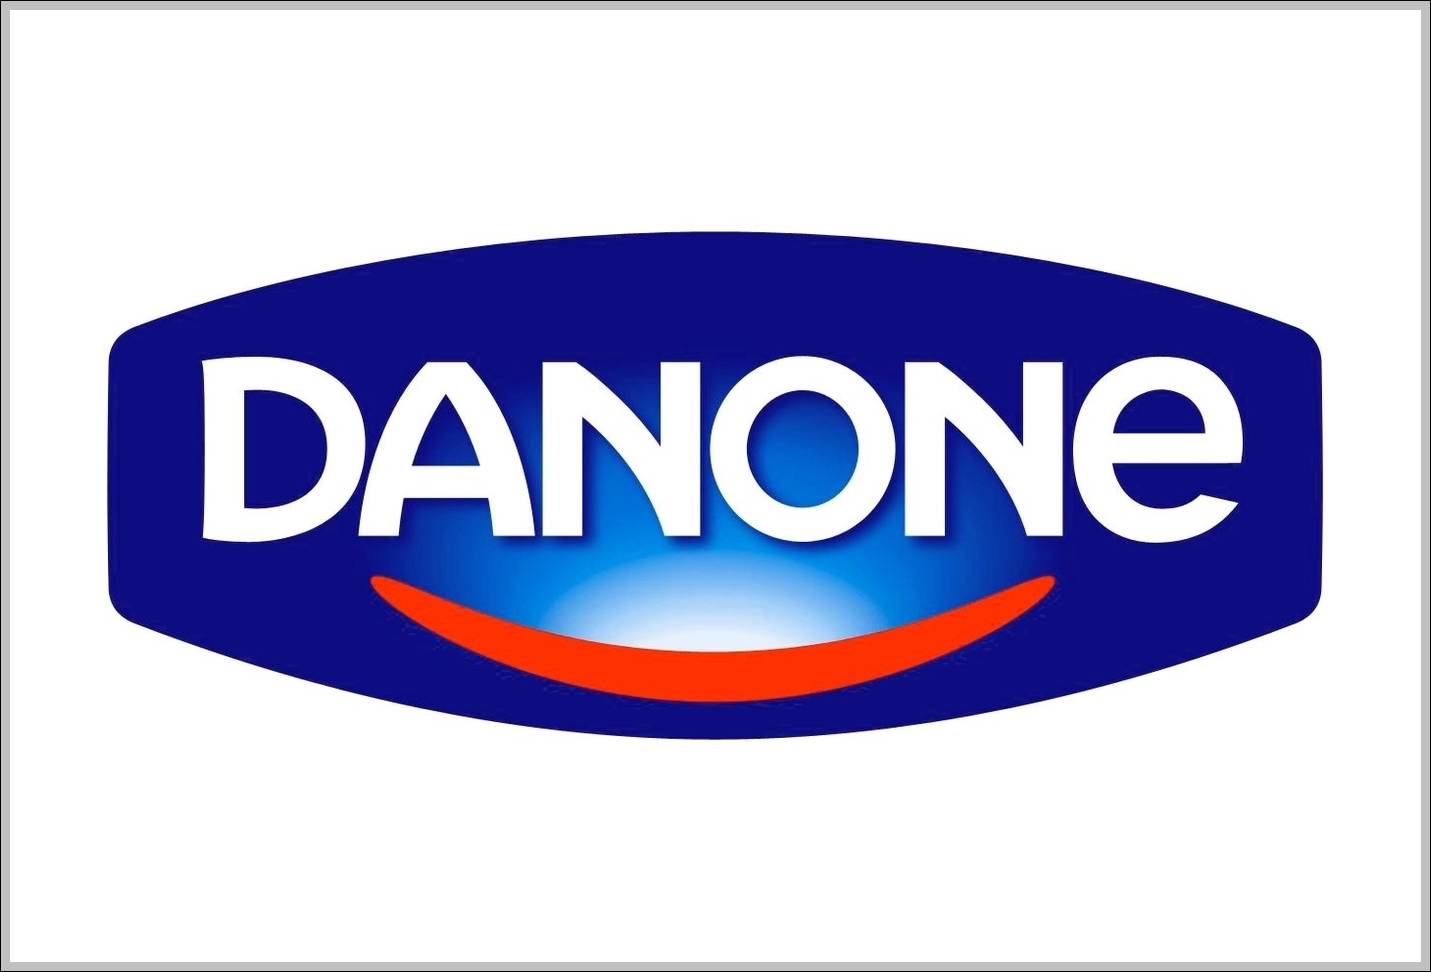 Danone brand logo